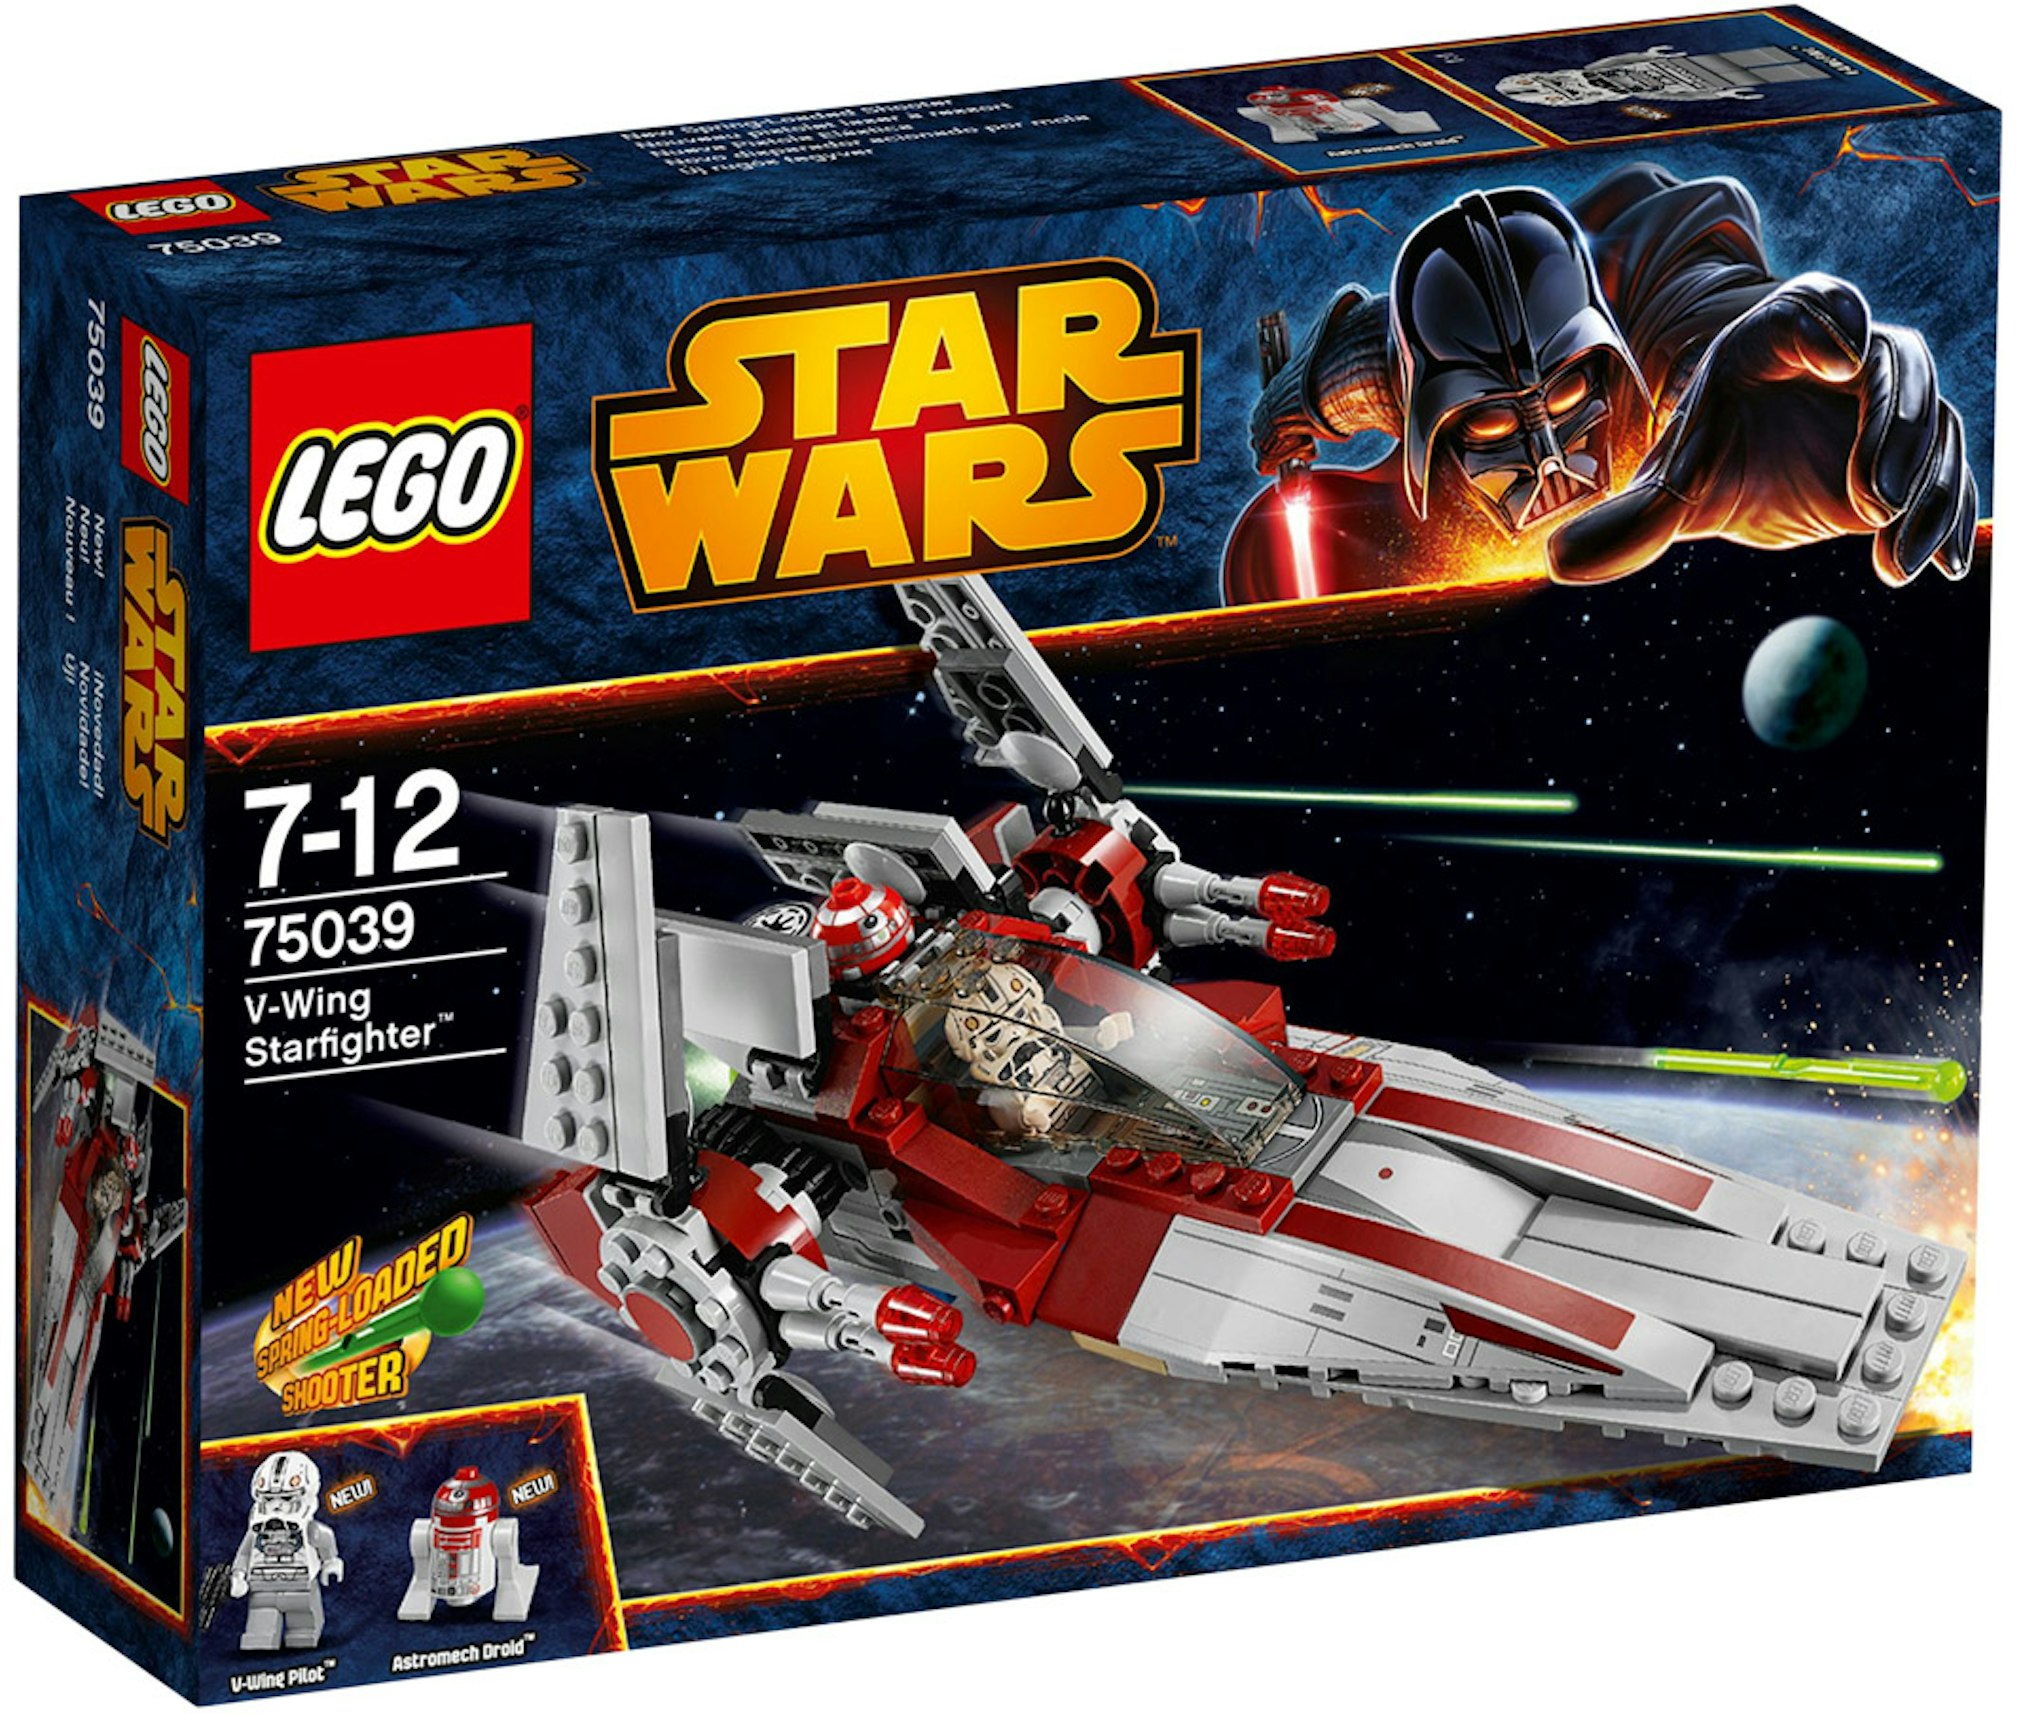 LEGO Wars Starfighter Set 75039 - US